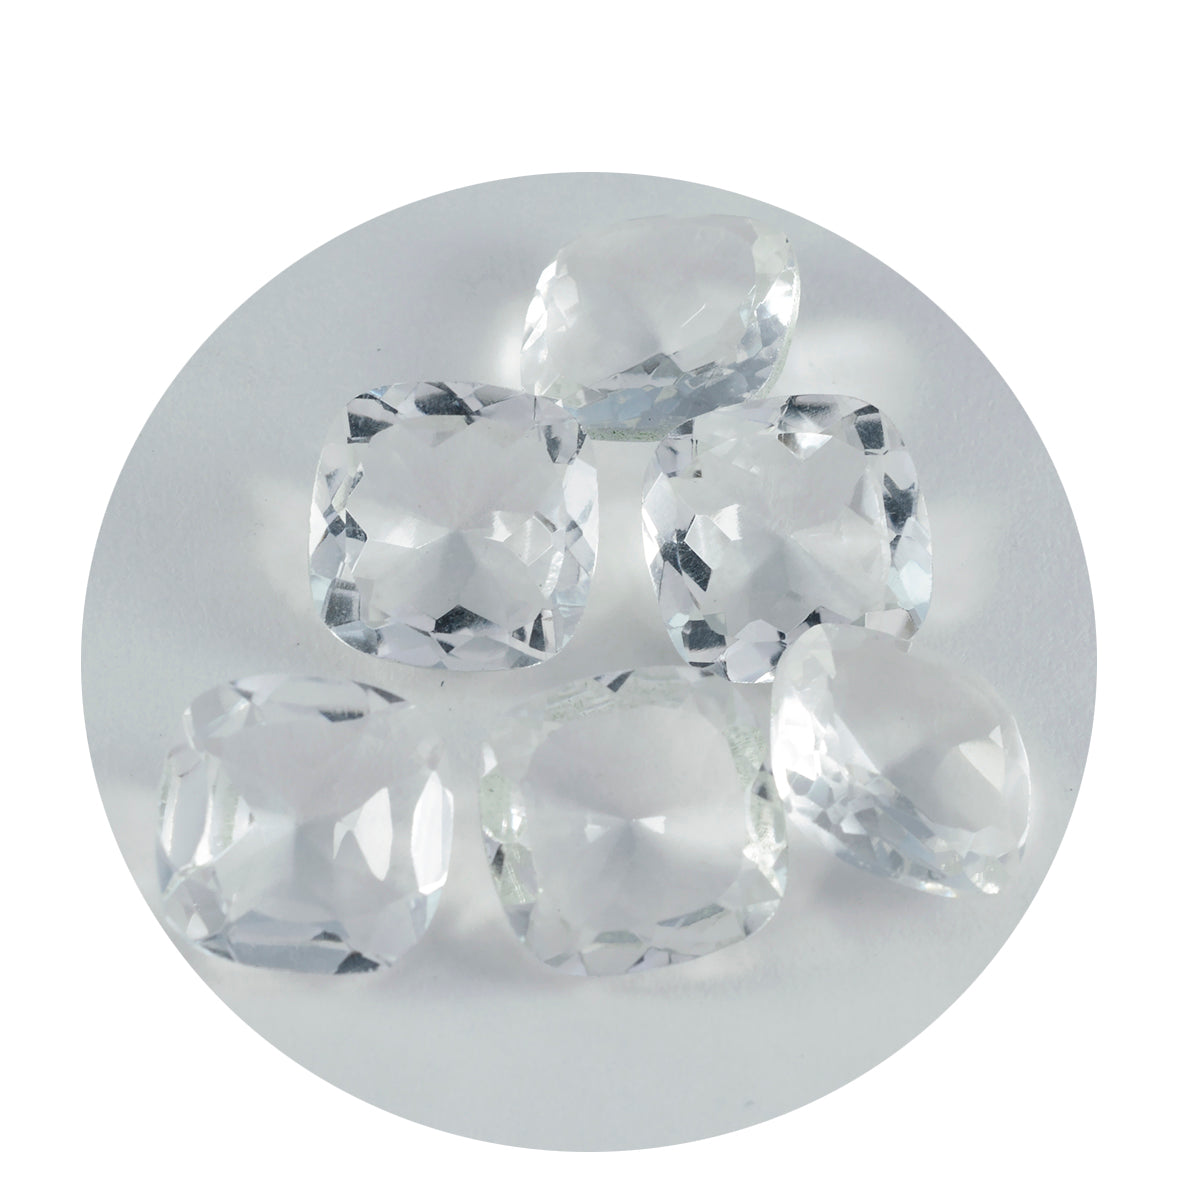 Riyogems 1PC White Crystal Quartz Faceted 13x13 mm Cushion Shape astonishing Quality Gems